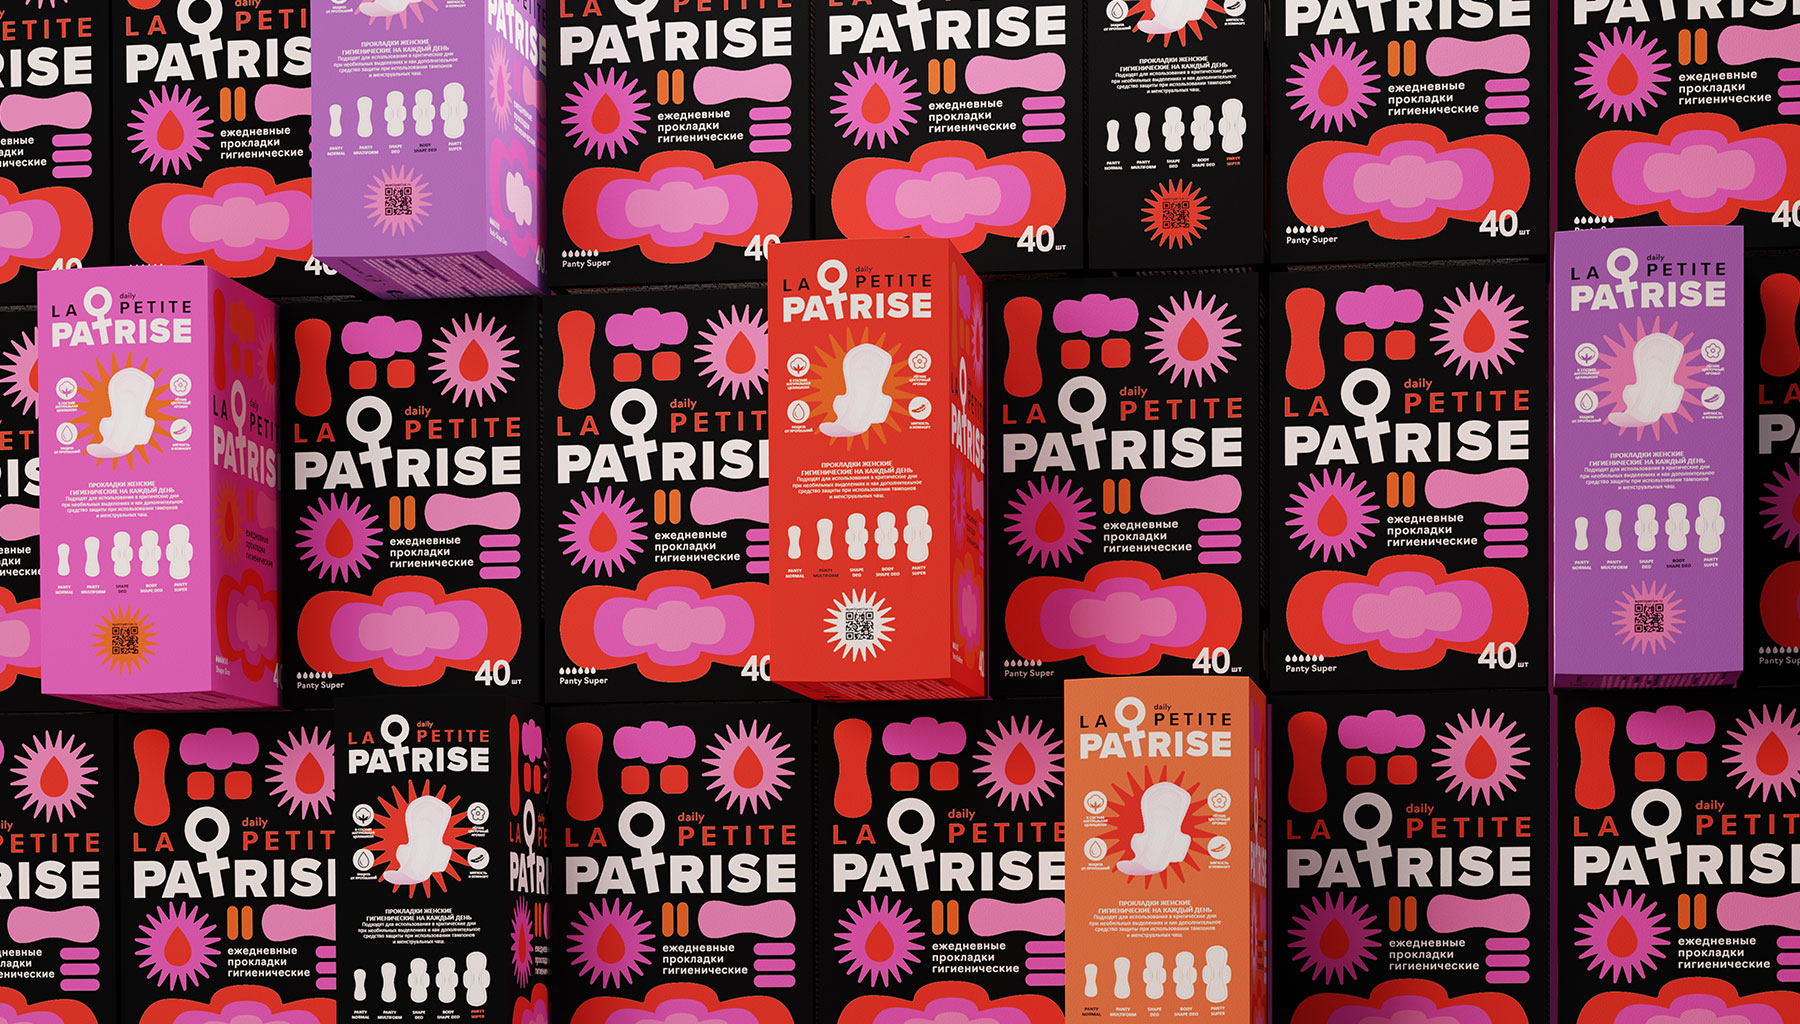 Packaging Design for La Petite Patrise Pads